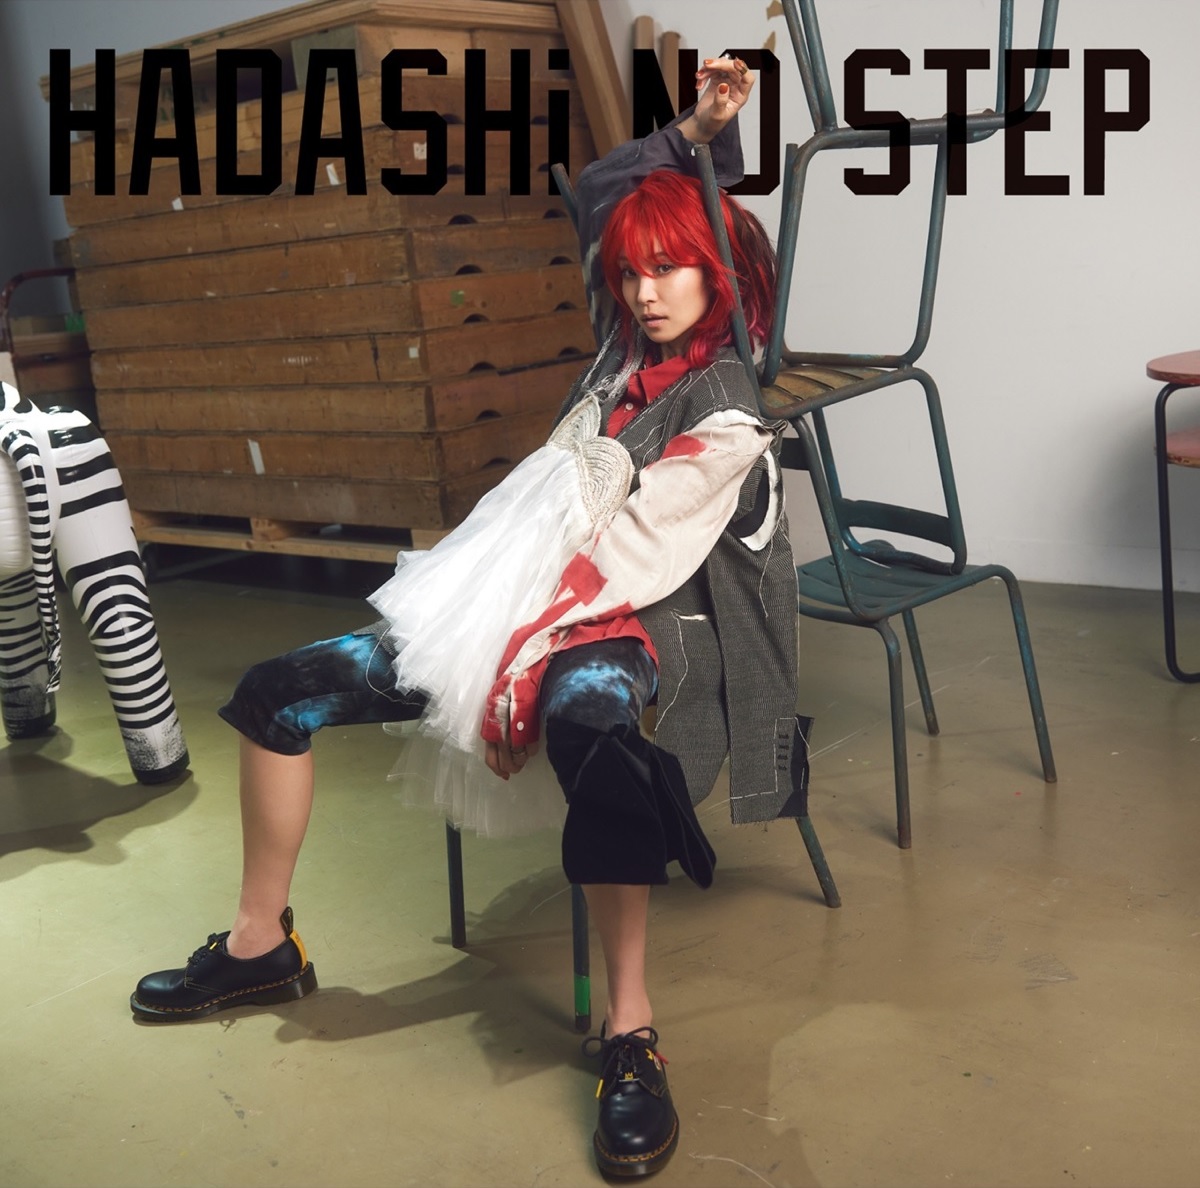 『LiSA - HADASHi NO STEP』収録の『HADASHi NO STEP』ジャケット